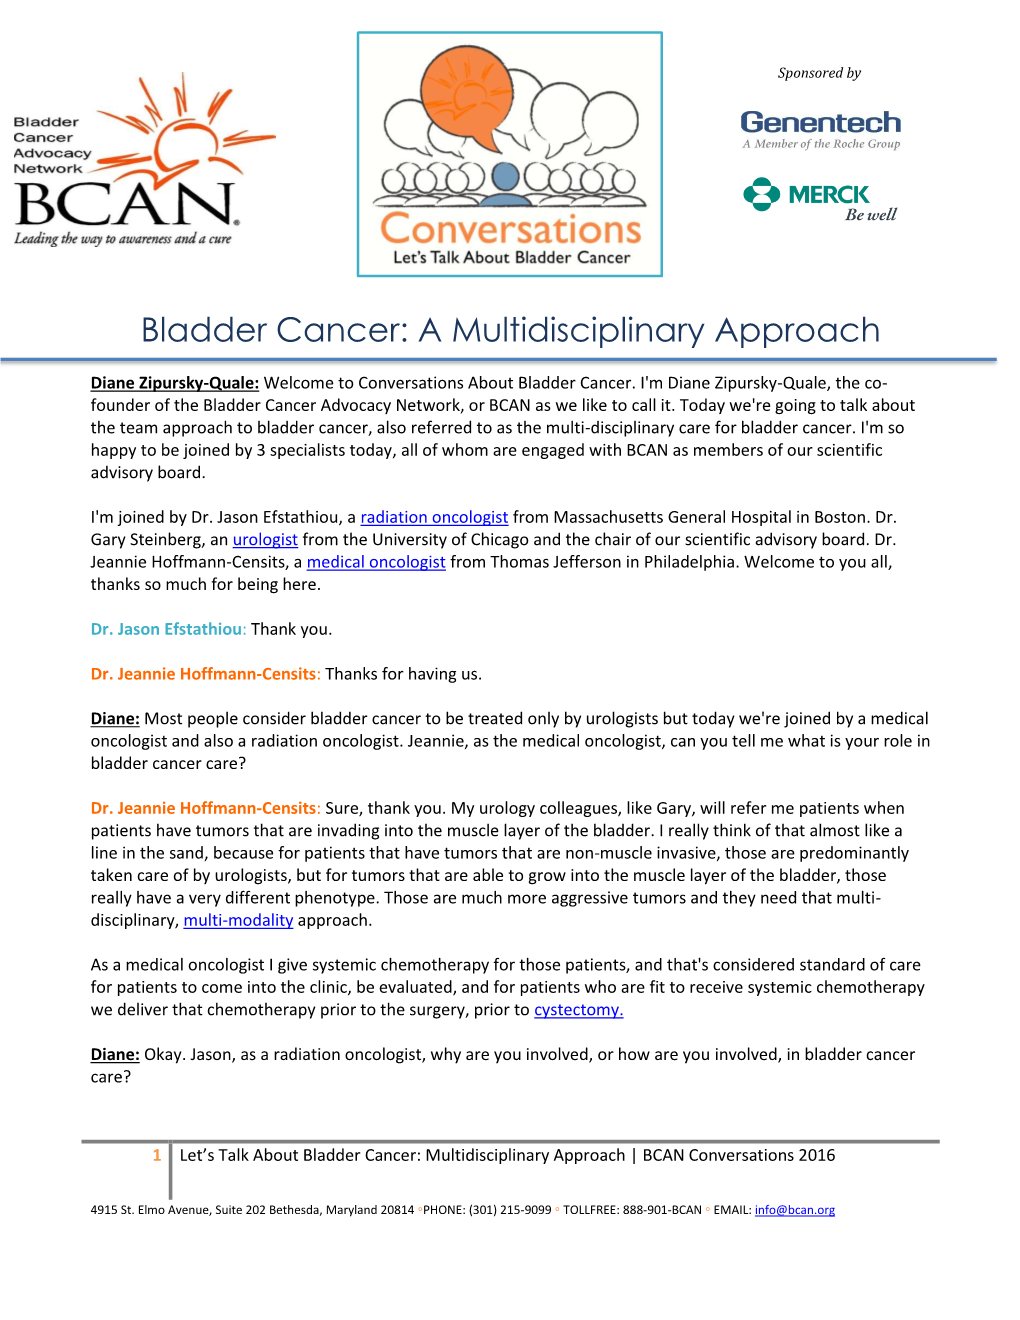 Bladder Cancer: a Multidisciplinary Approach